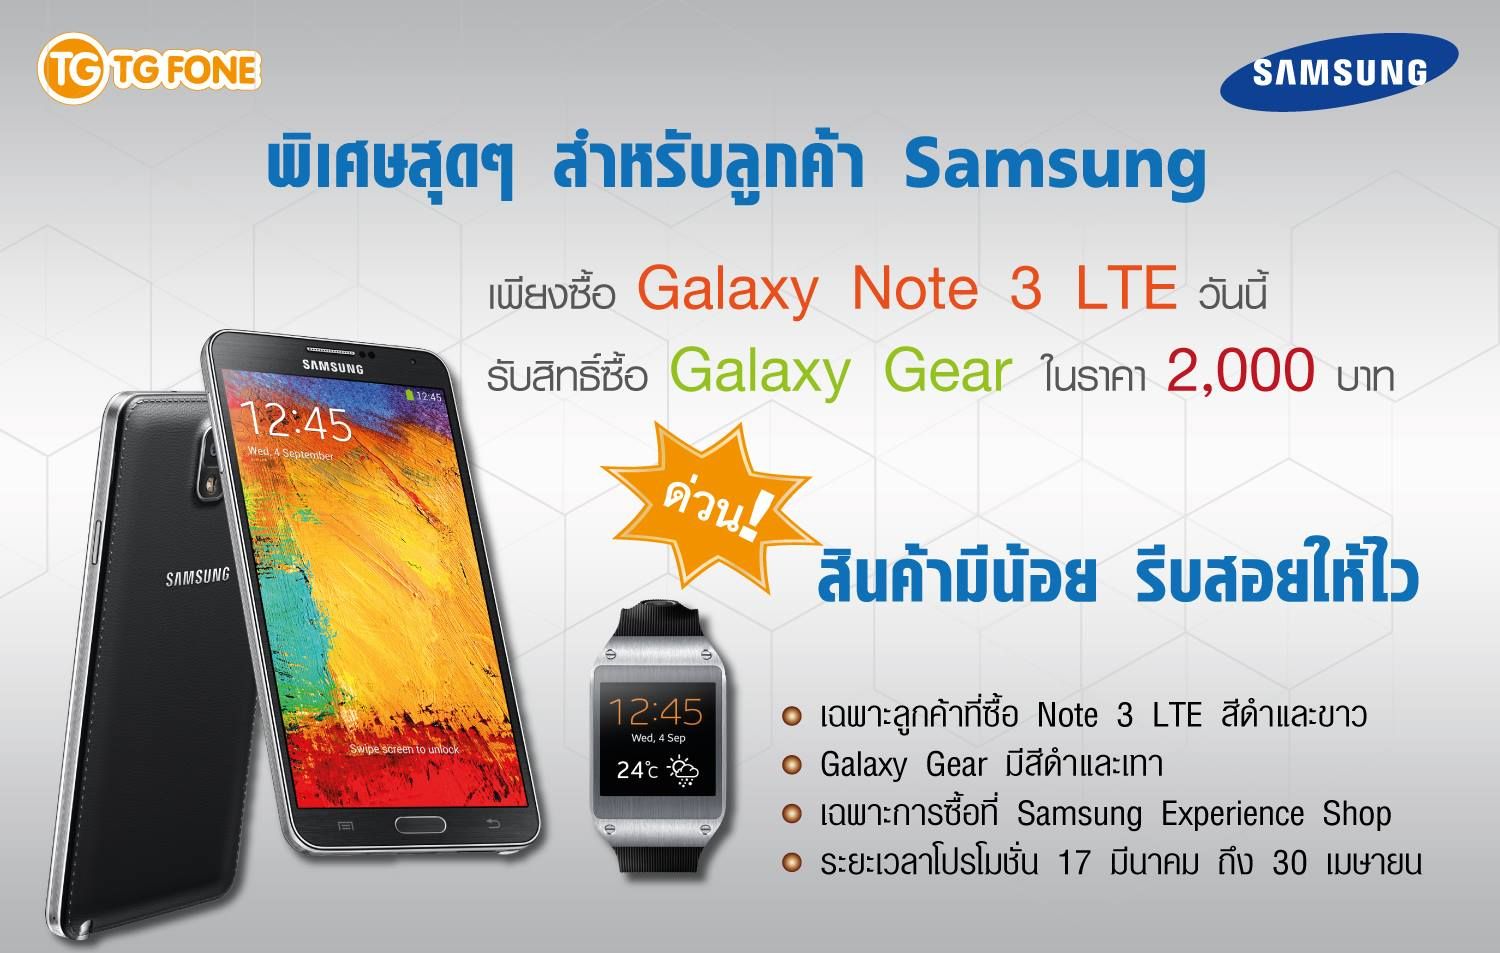 TG Fone จัดหนัก ซื้อ Note 3 LTE วันนี้แลกซื้อ Galaxy Gear ได้ในราคา 2,000 บาท